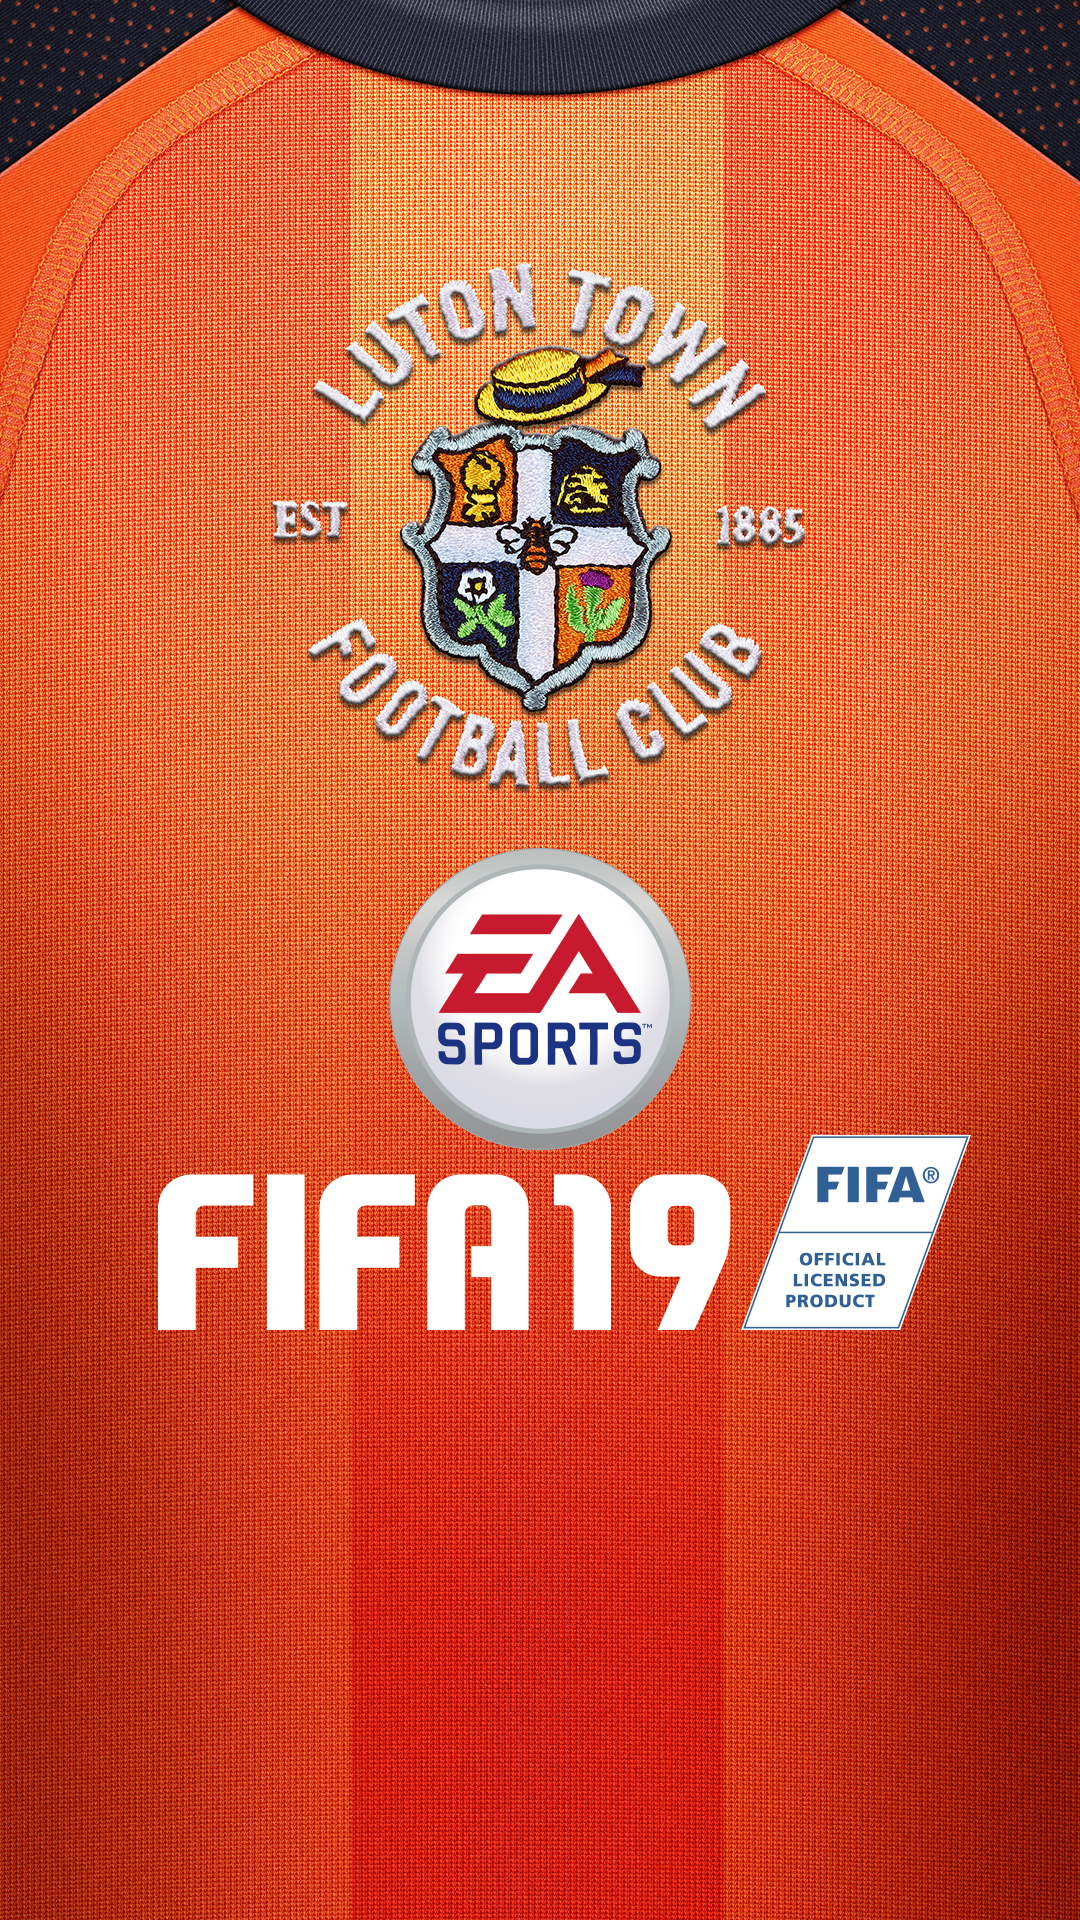 FIFA 19 - Cardiff City F.C. Club Pack - EA SPORTS